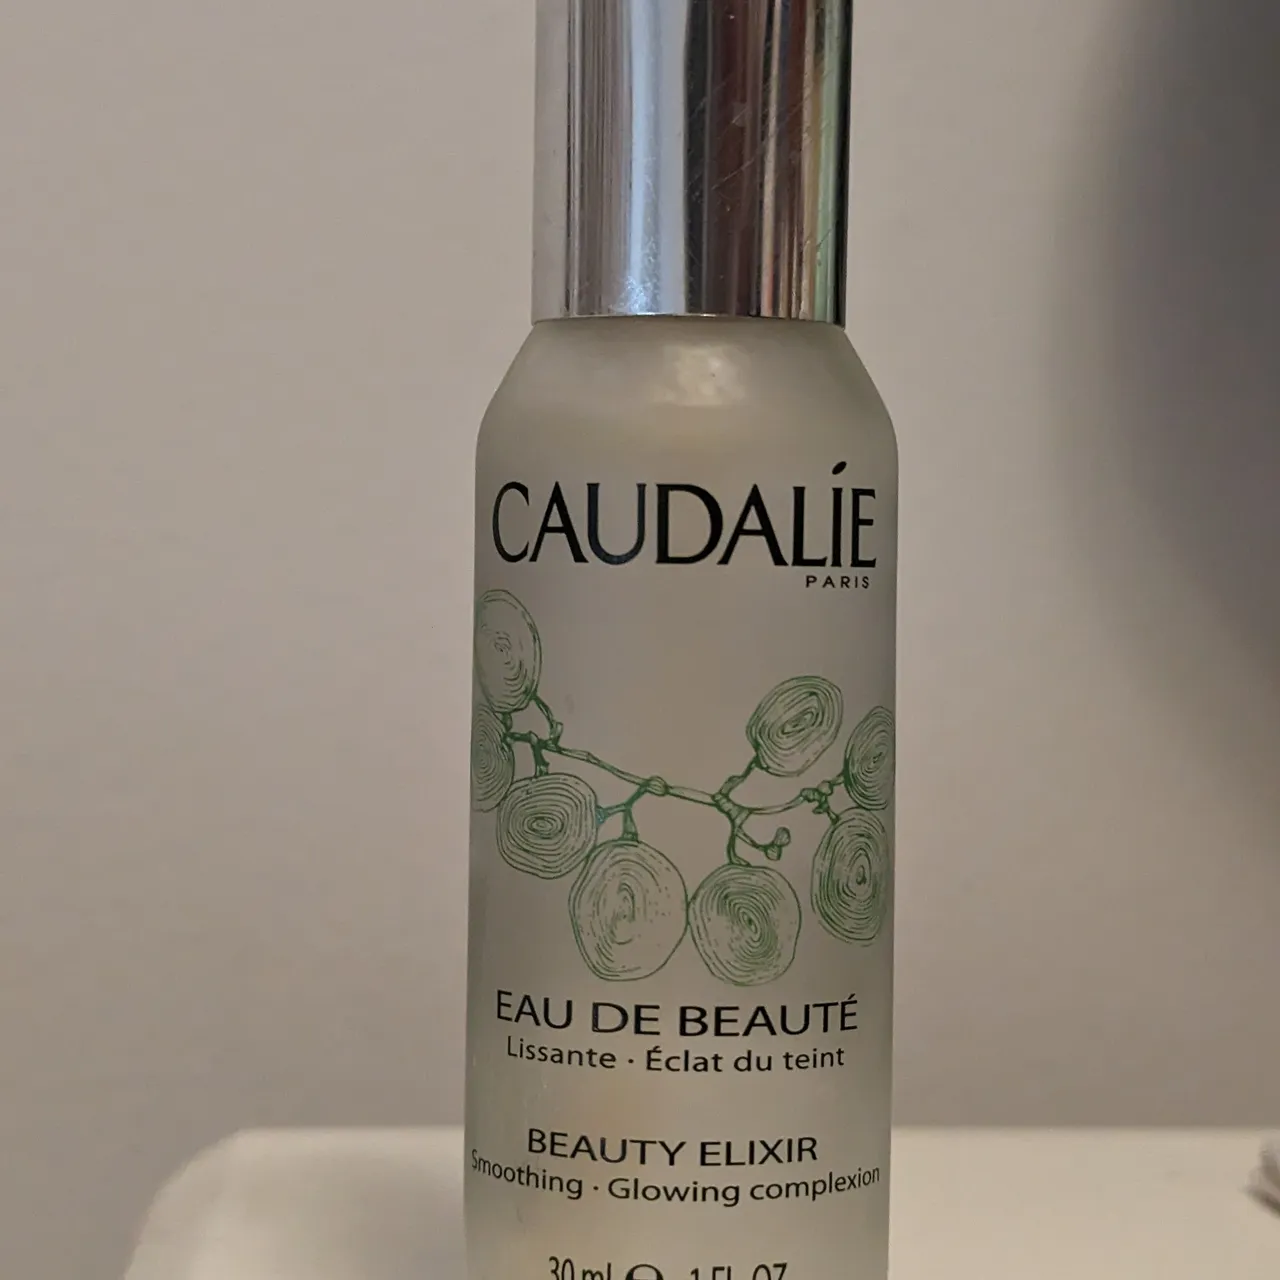 Caudalie Beauty Elixir photo 1